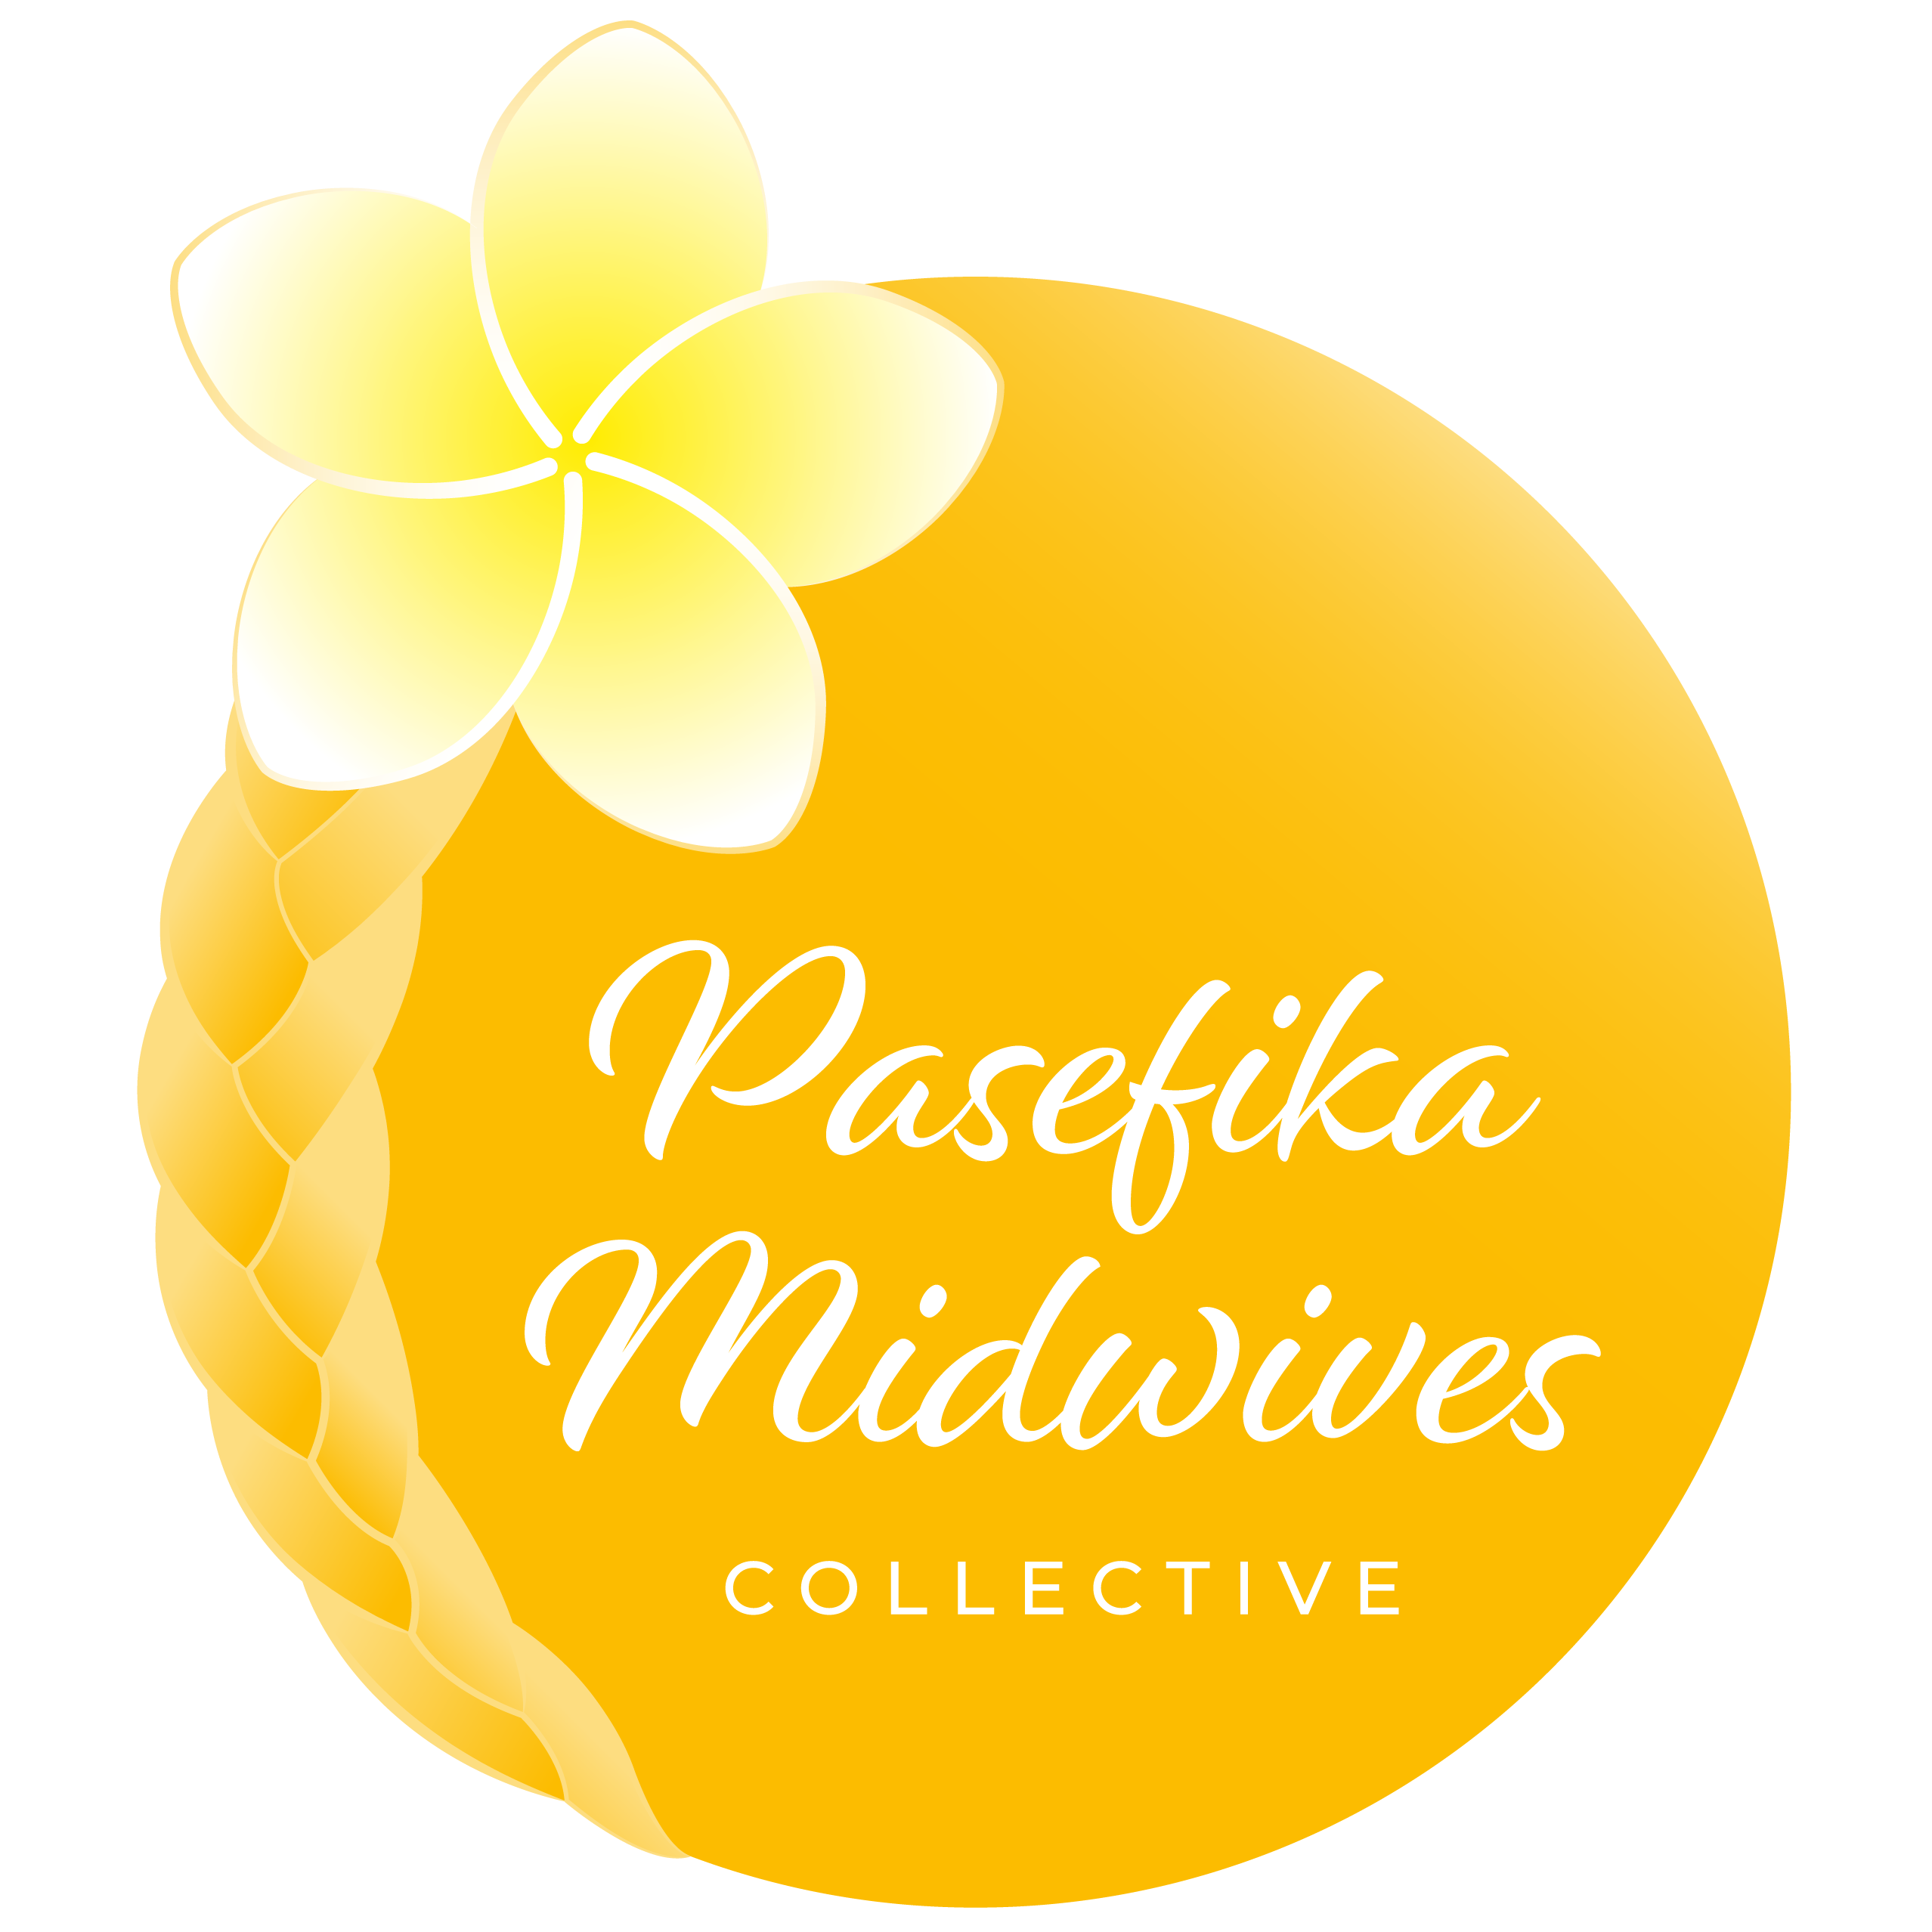 Pasefika Midwives Collective